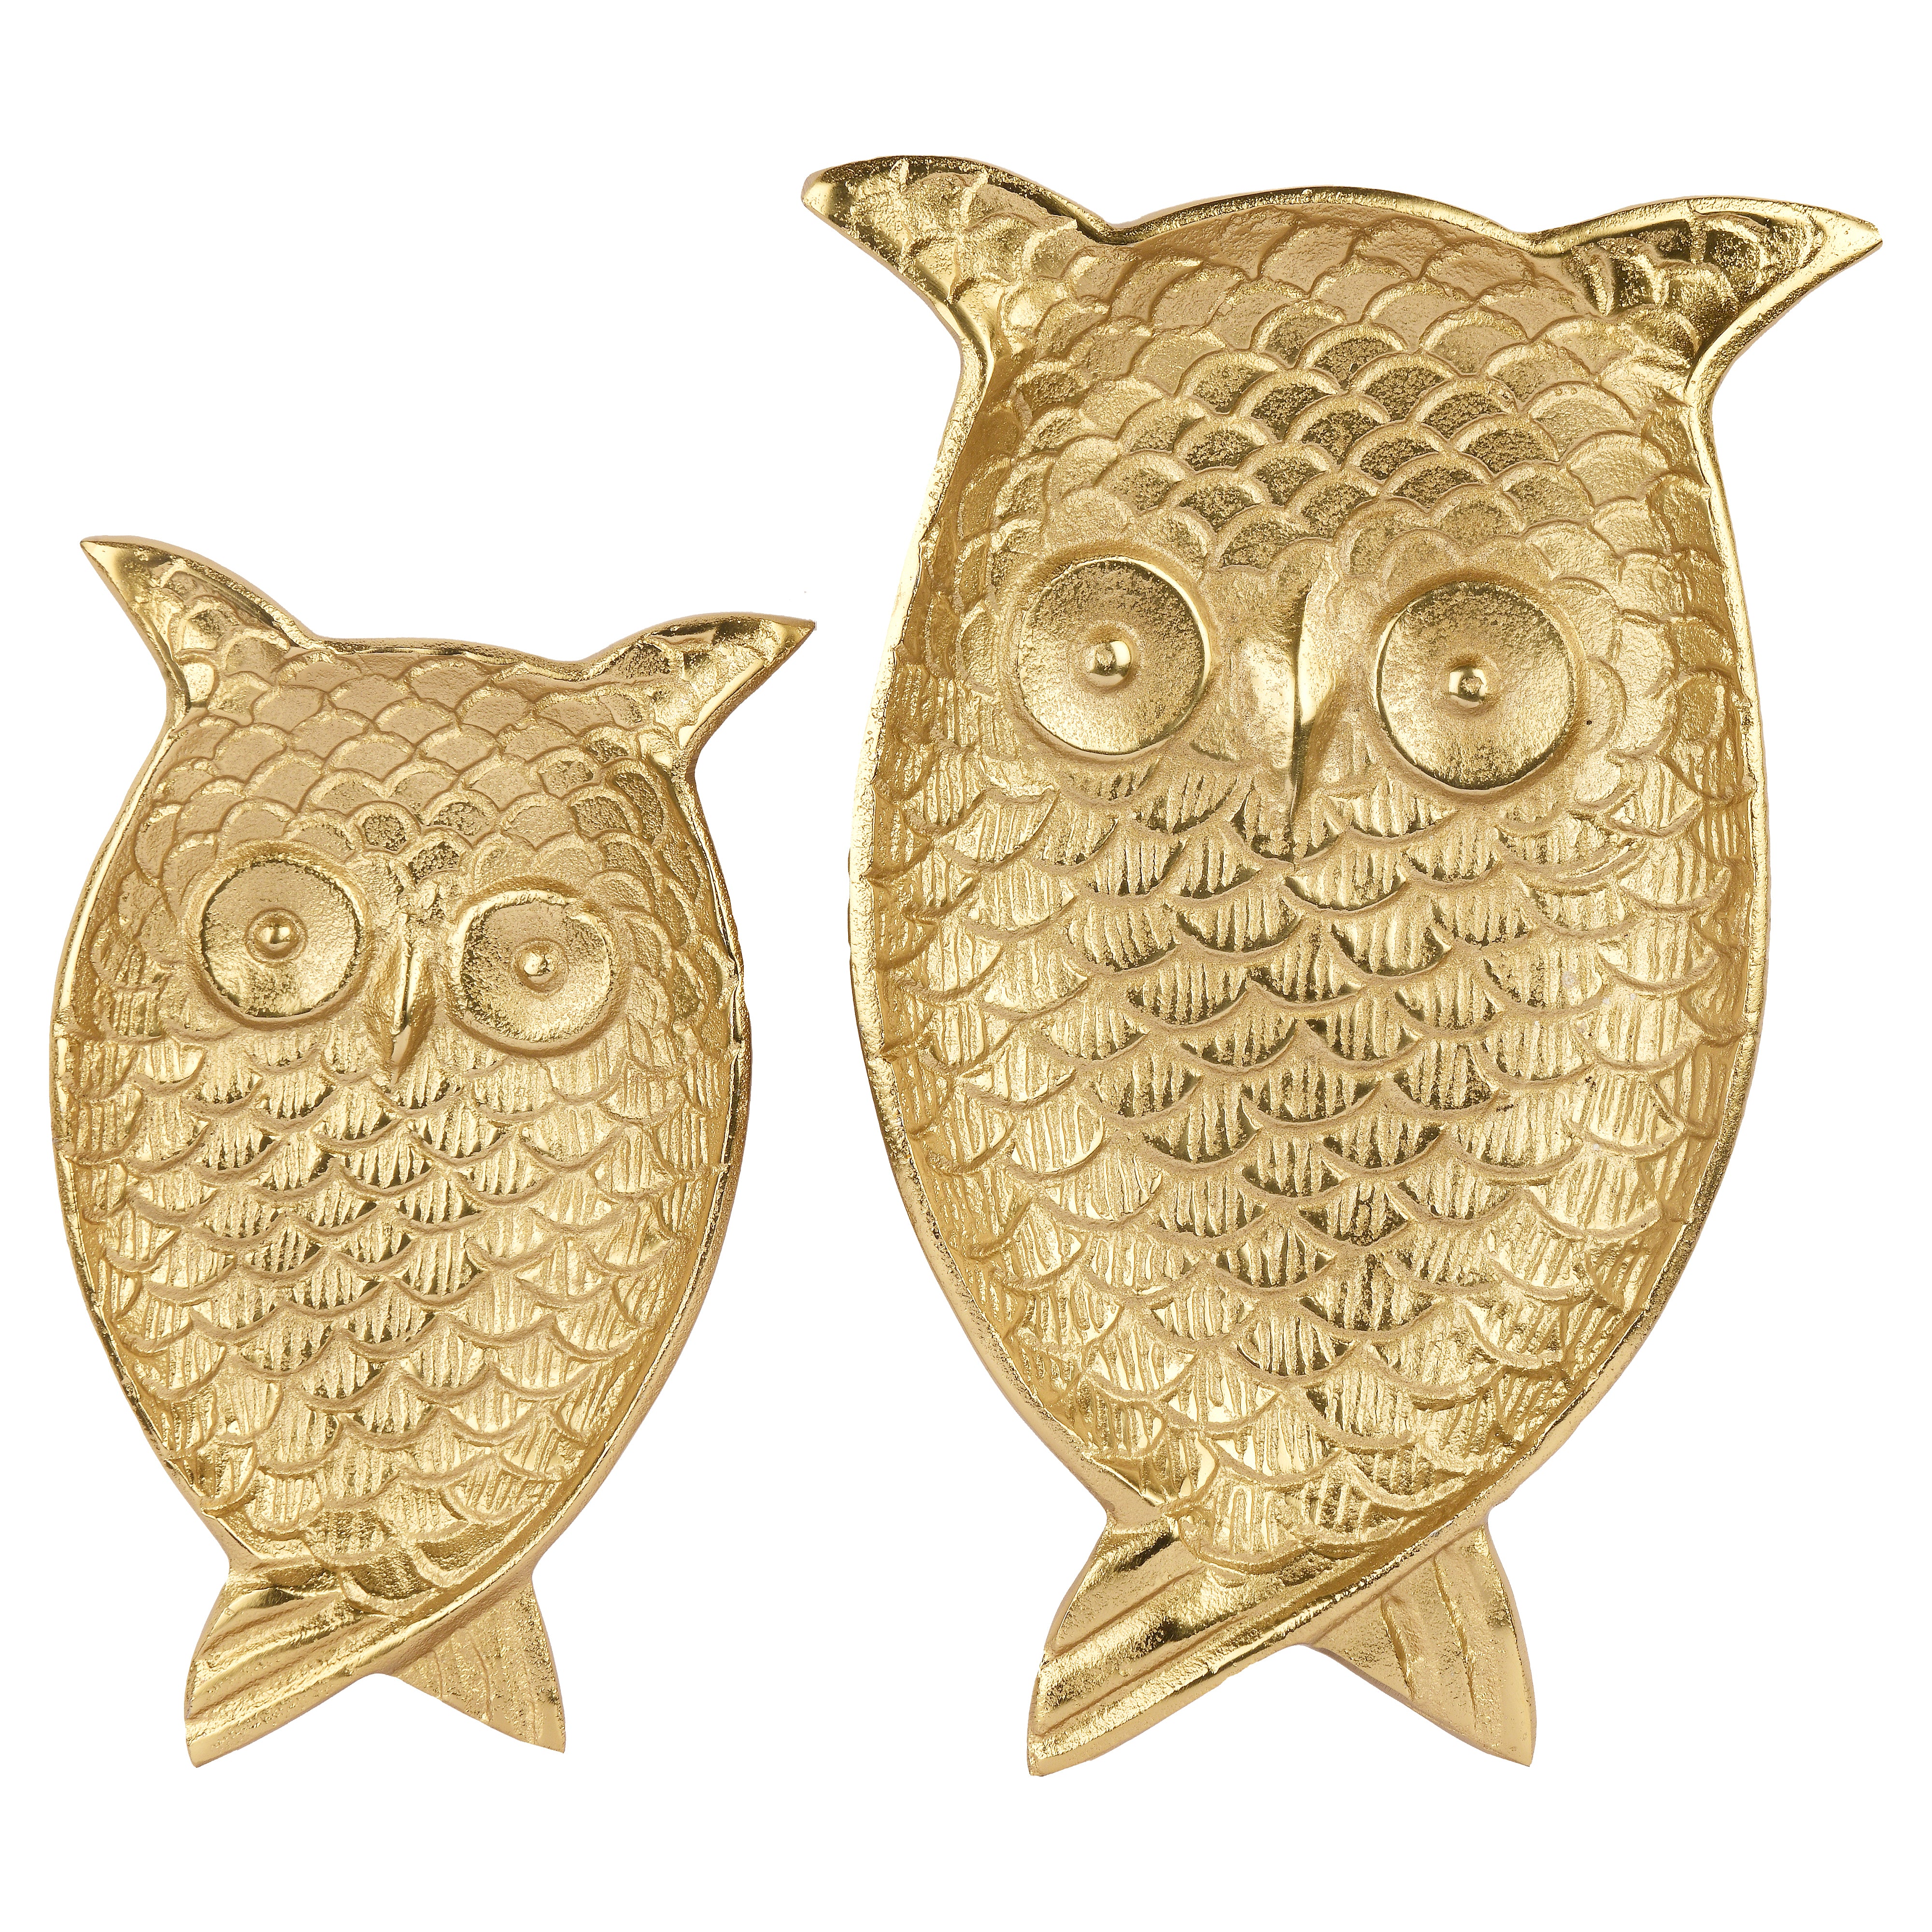 Owl Decor Platters Big and Medium Size